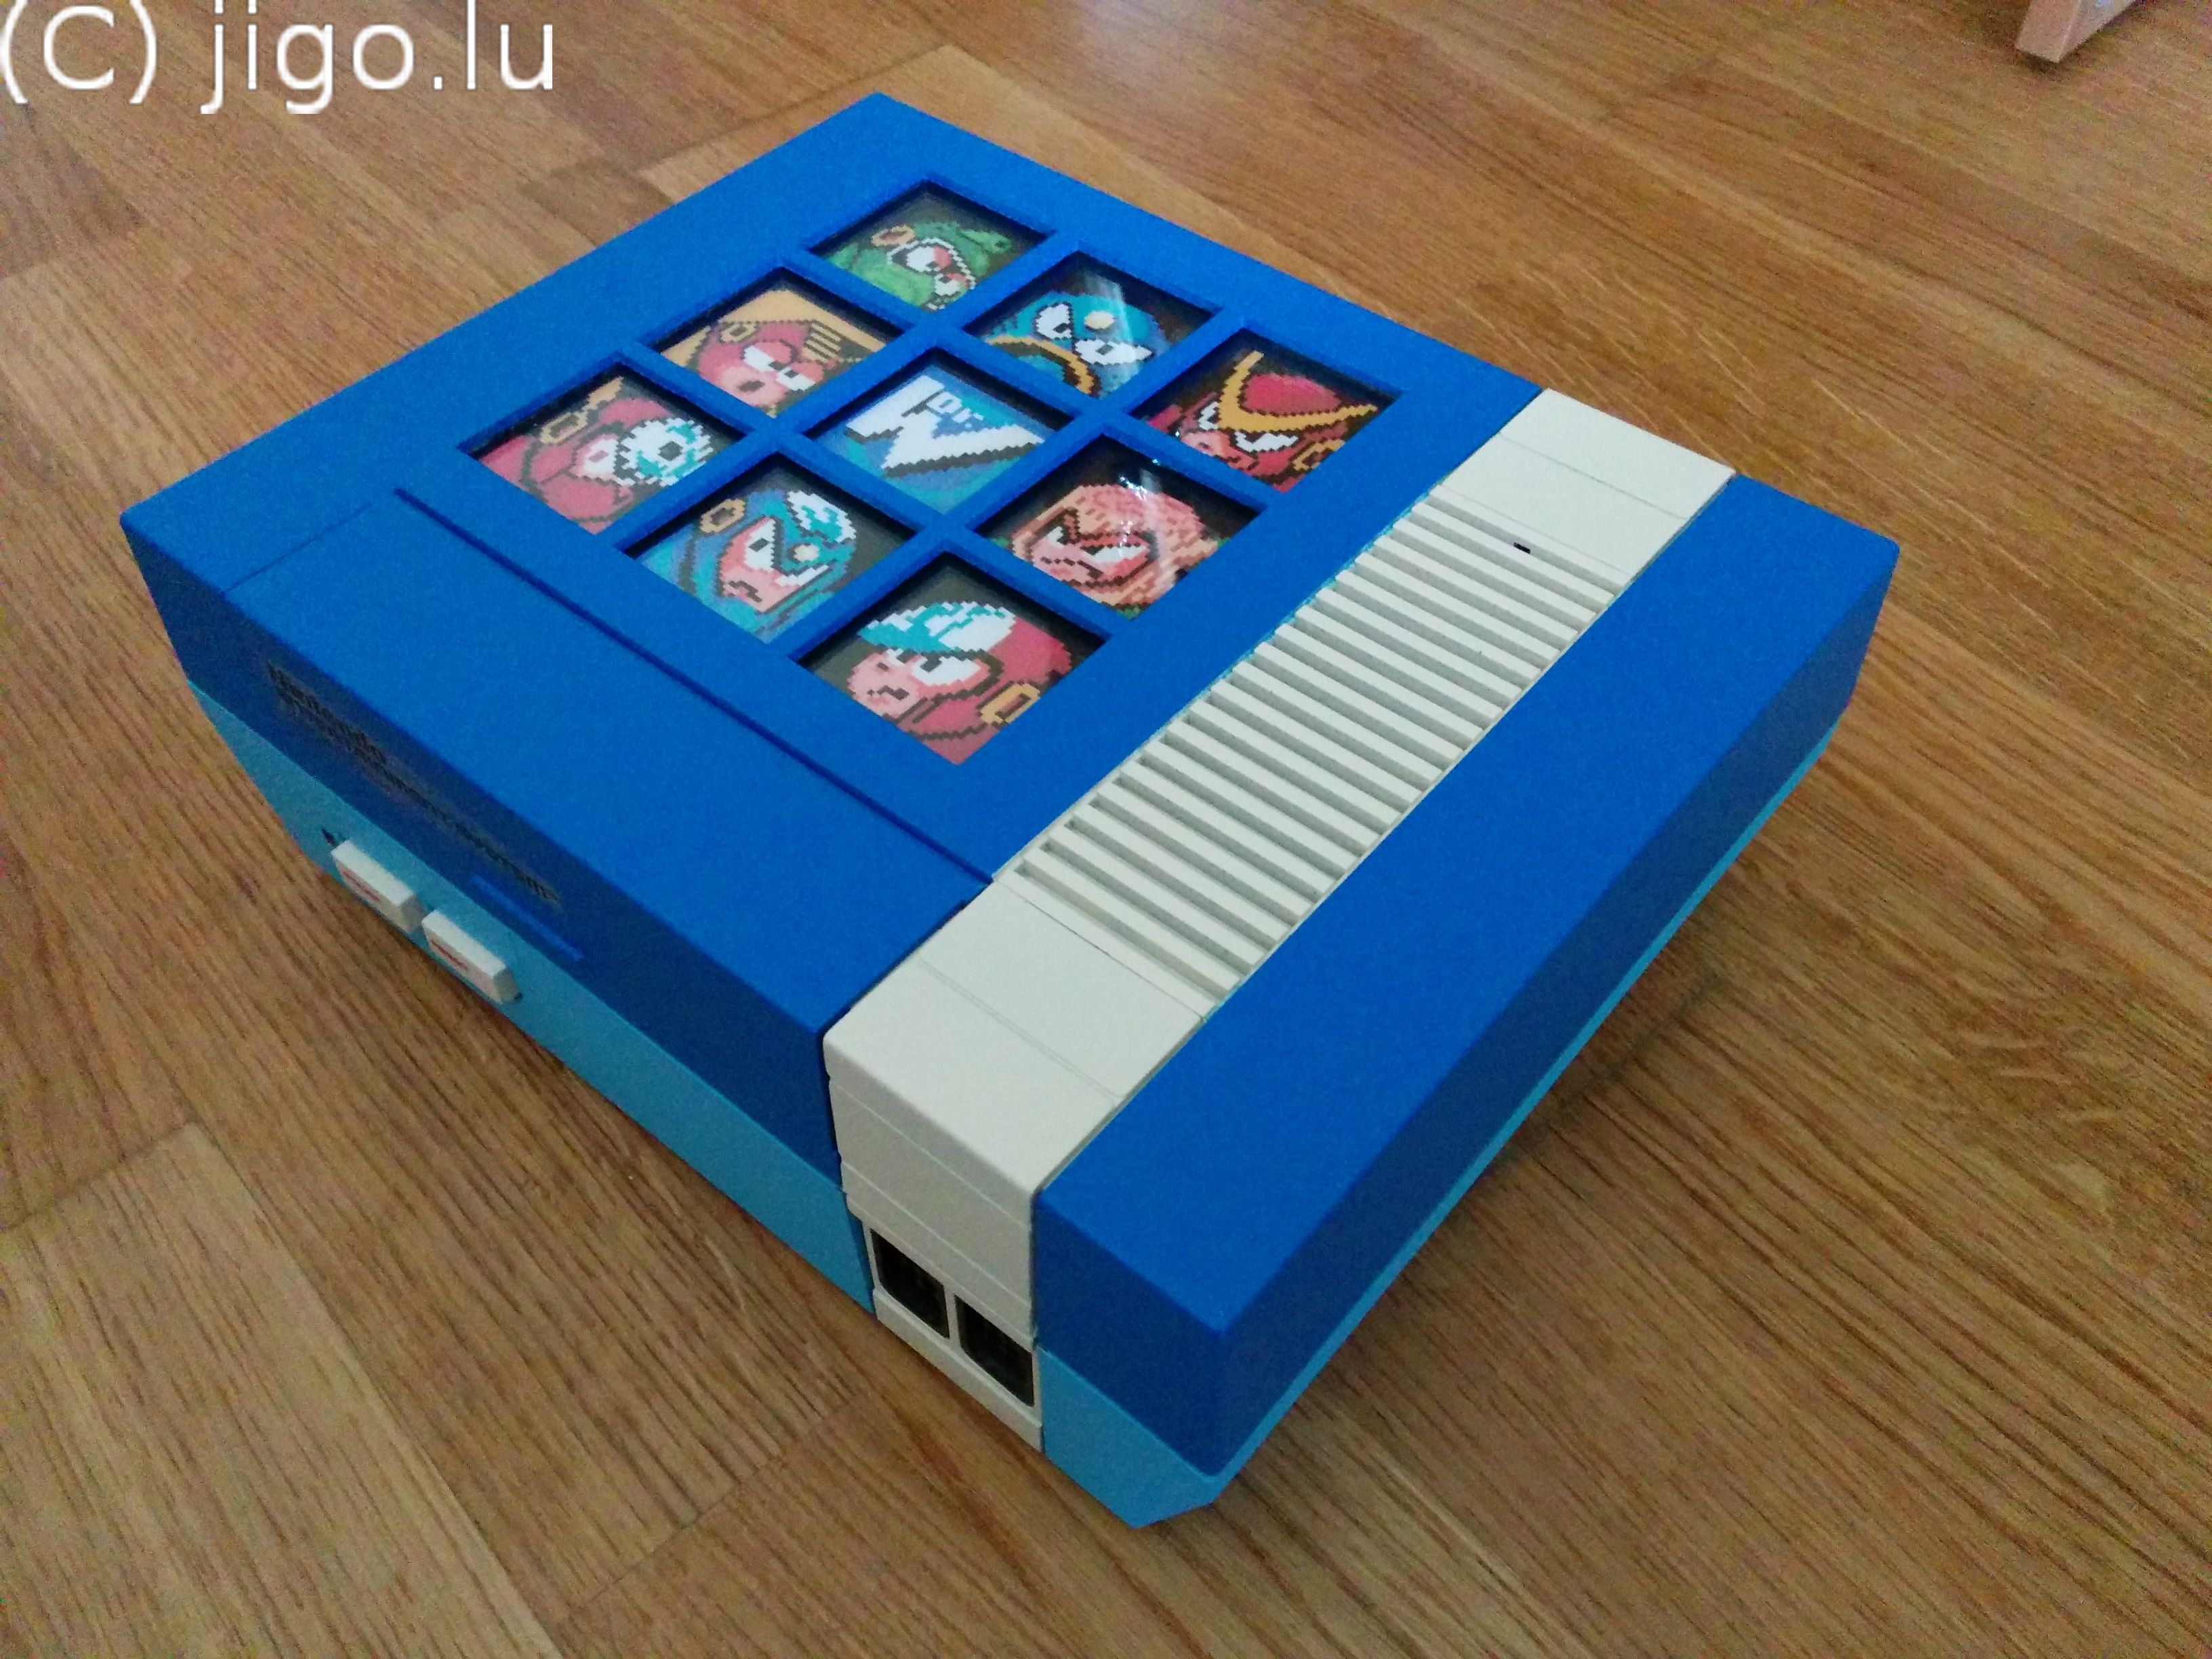 Mega Man 2 NES by Jigo